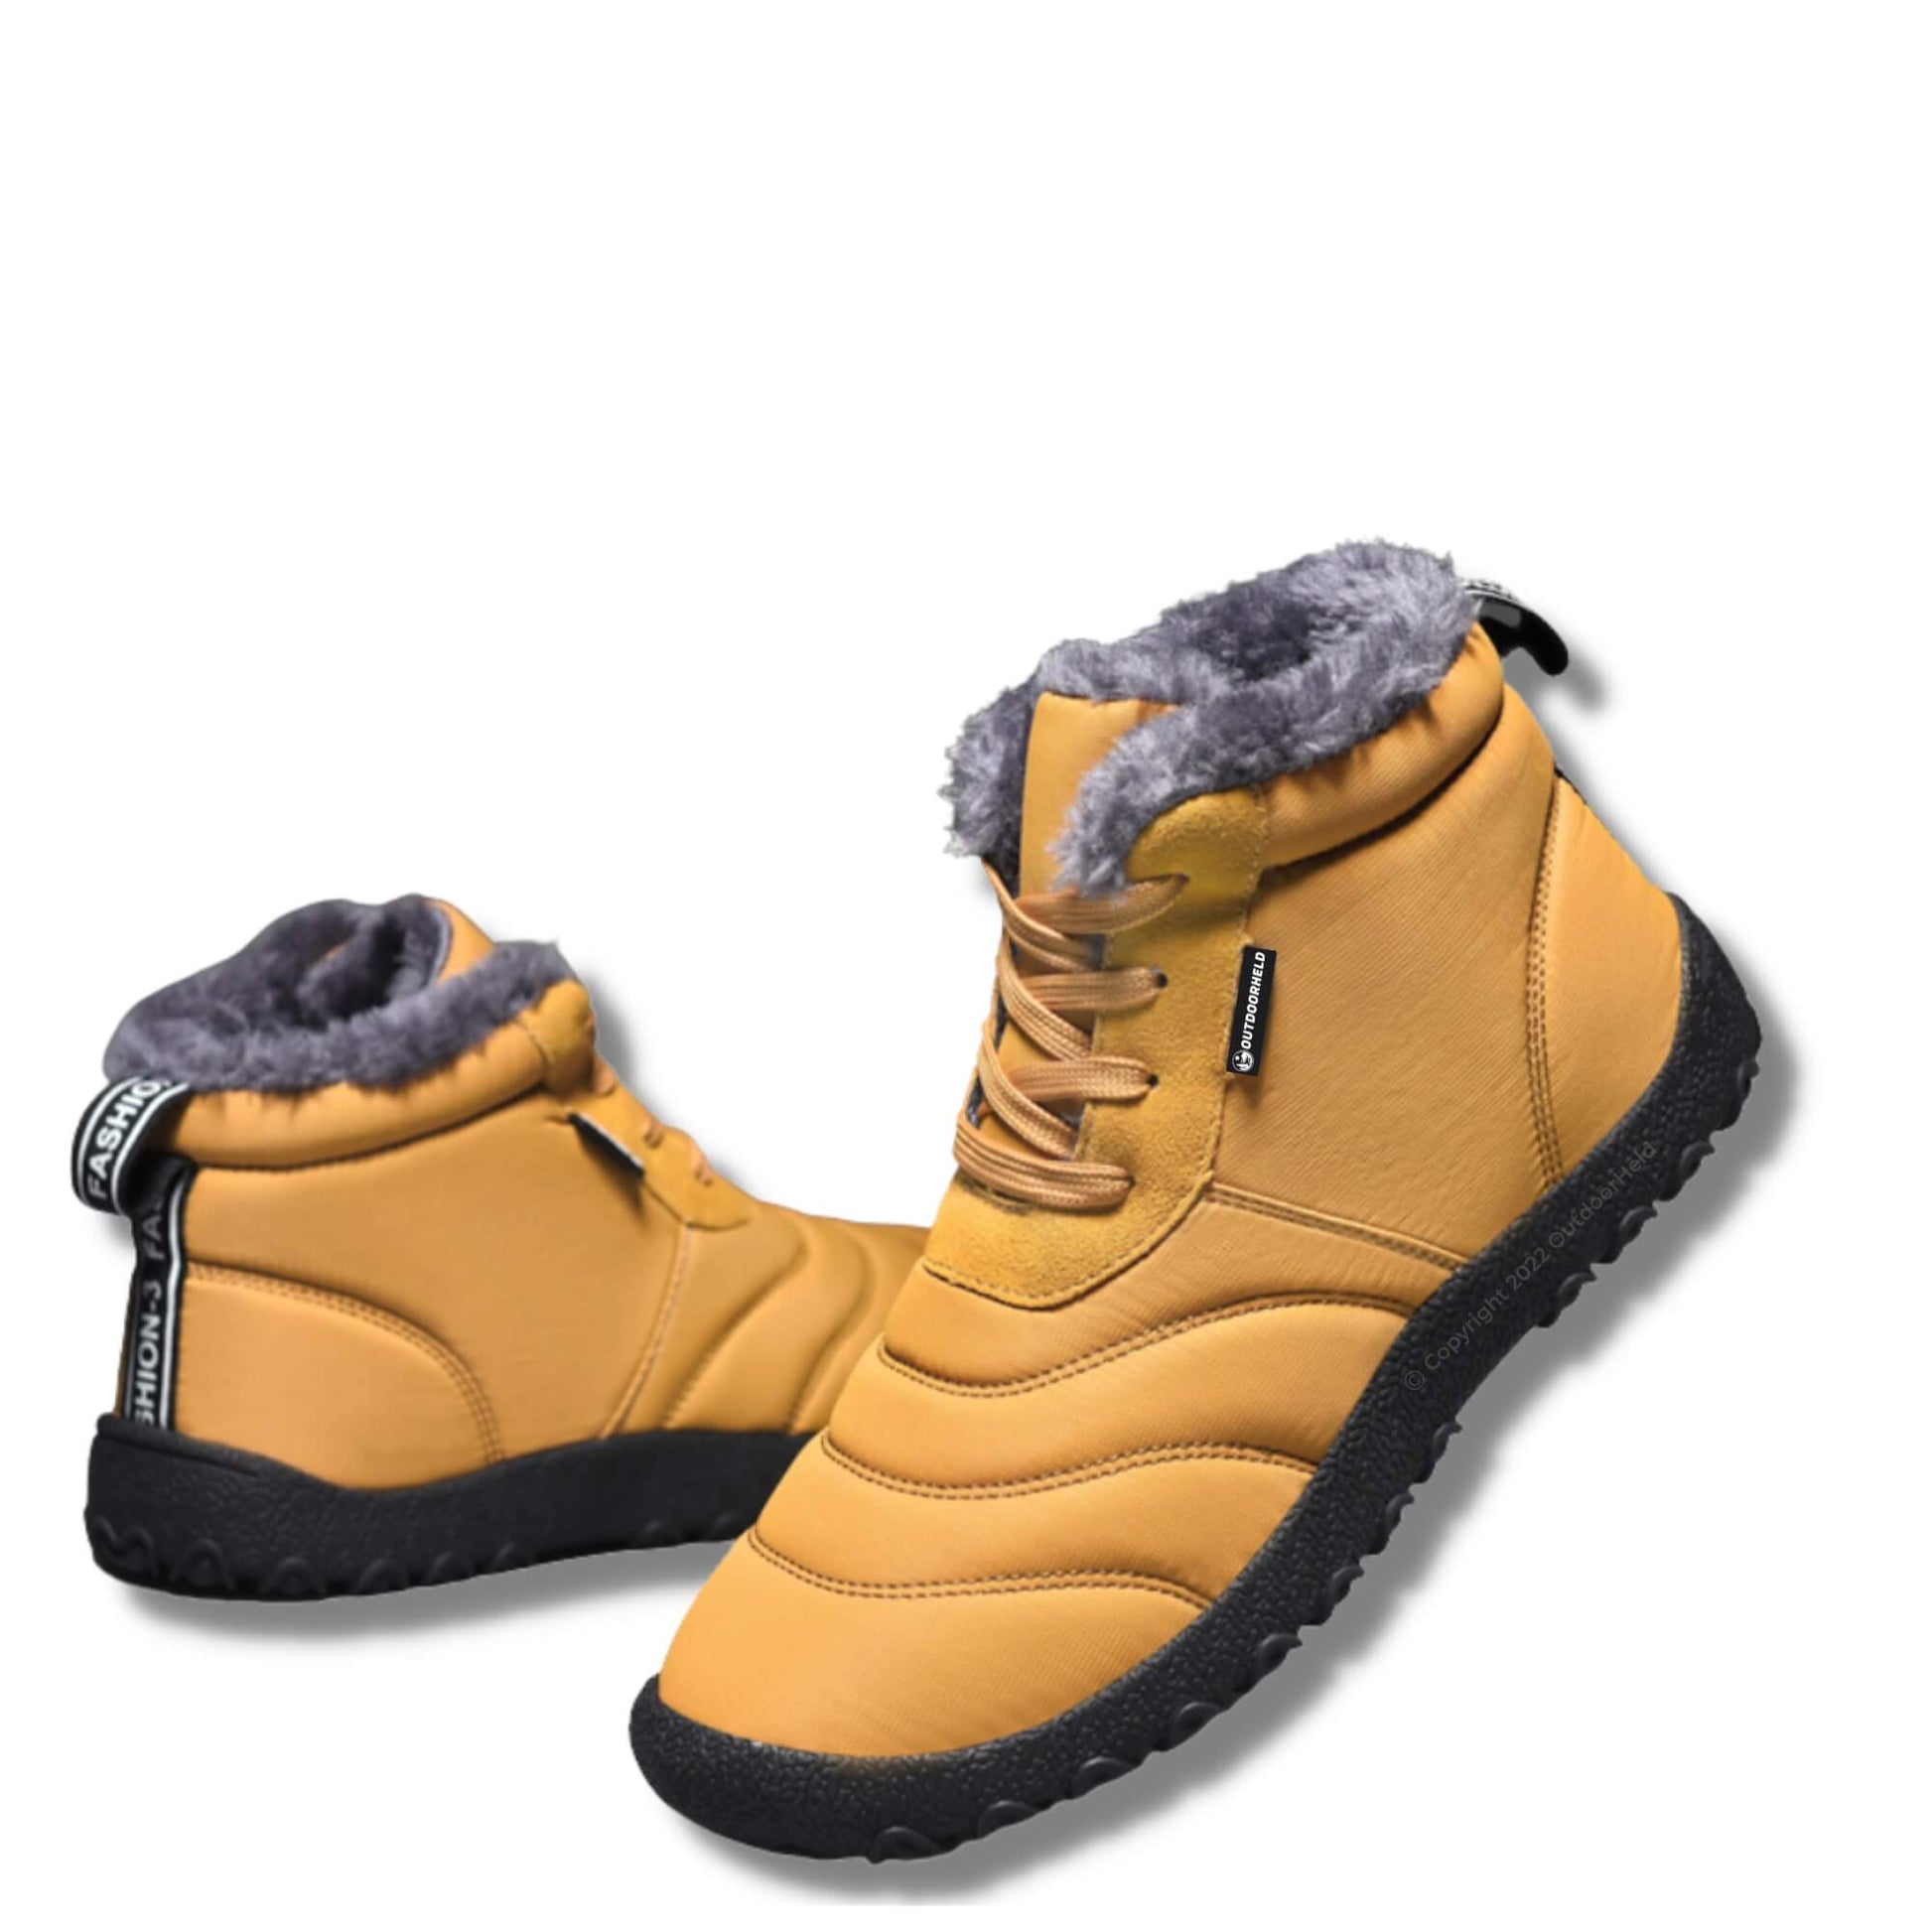 Chaussures Winter Pro imperméables